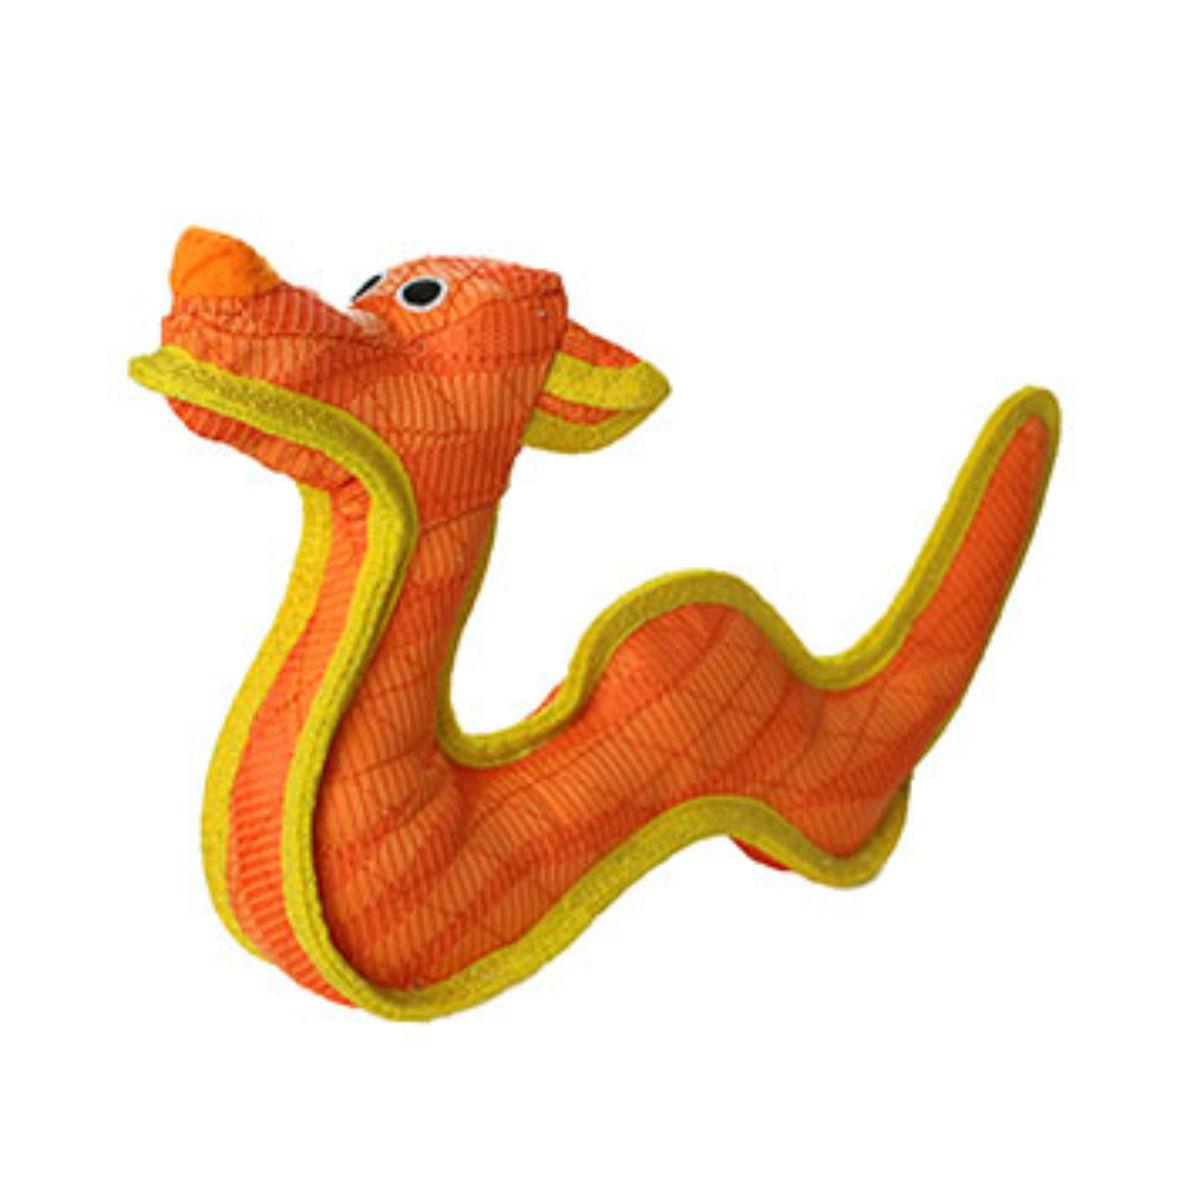 Duraforce Dragon Dog Toy - Orange